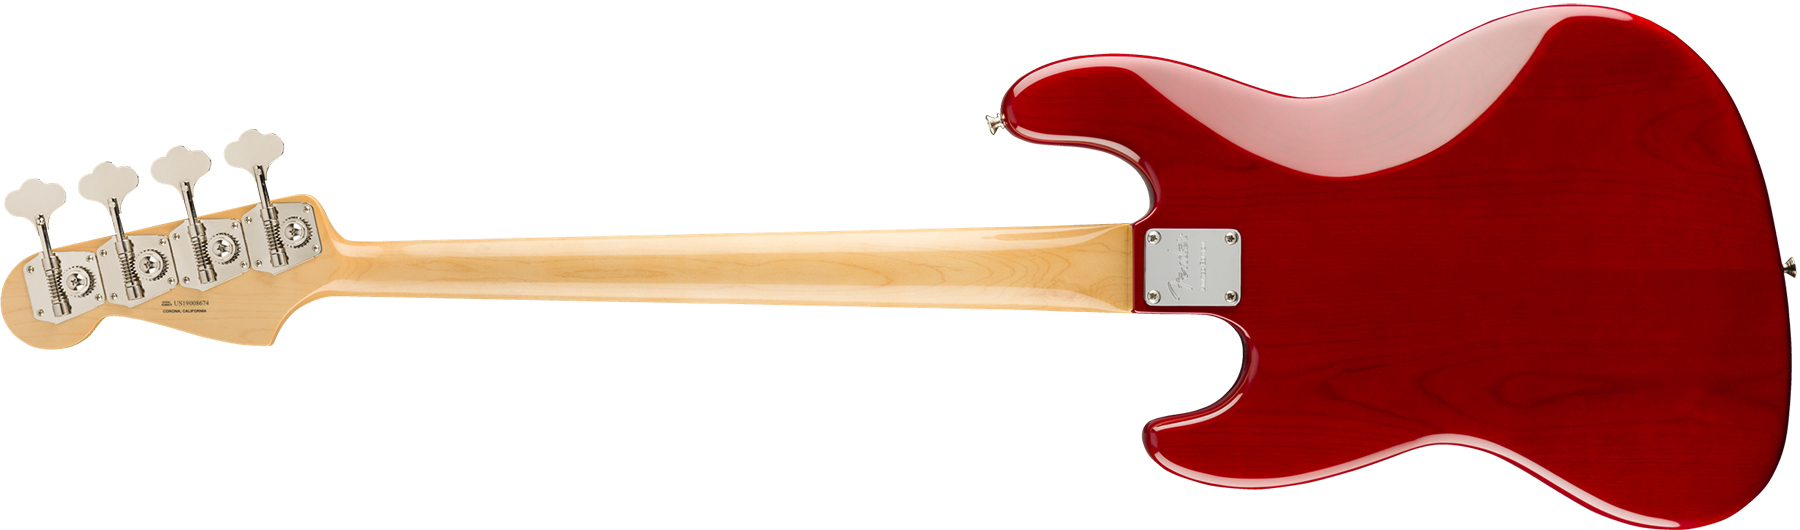 Fender Jazz Bass Flame Ash Top Rarities Usa Eb - Plasma Red Burst - Solid body elektrische bas - Variation 1